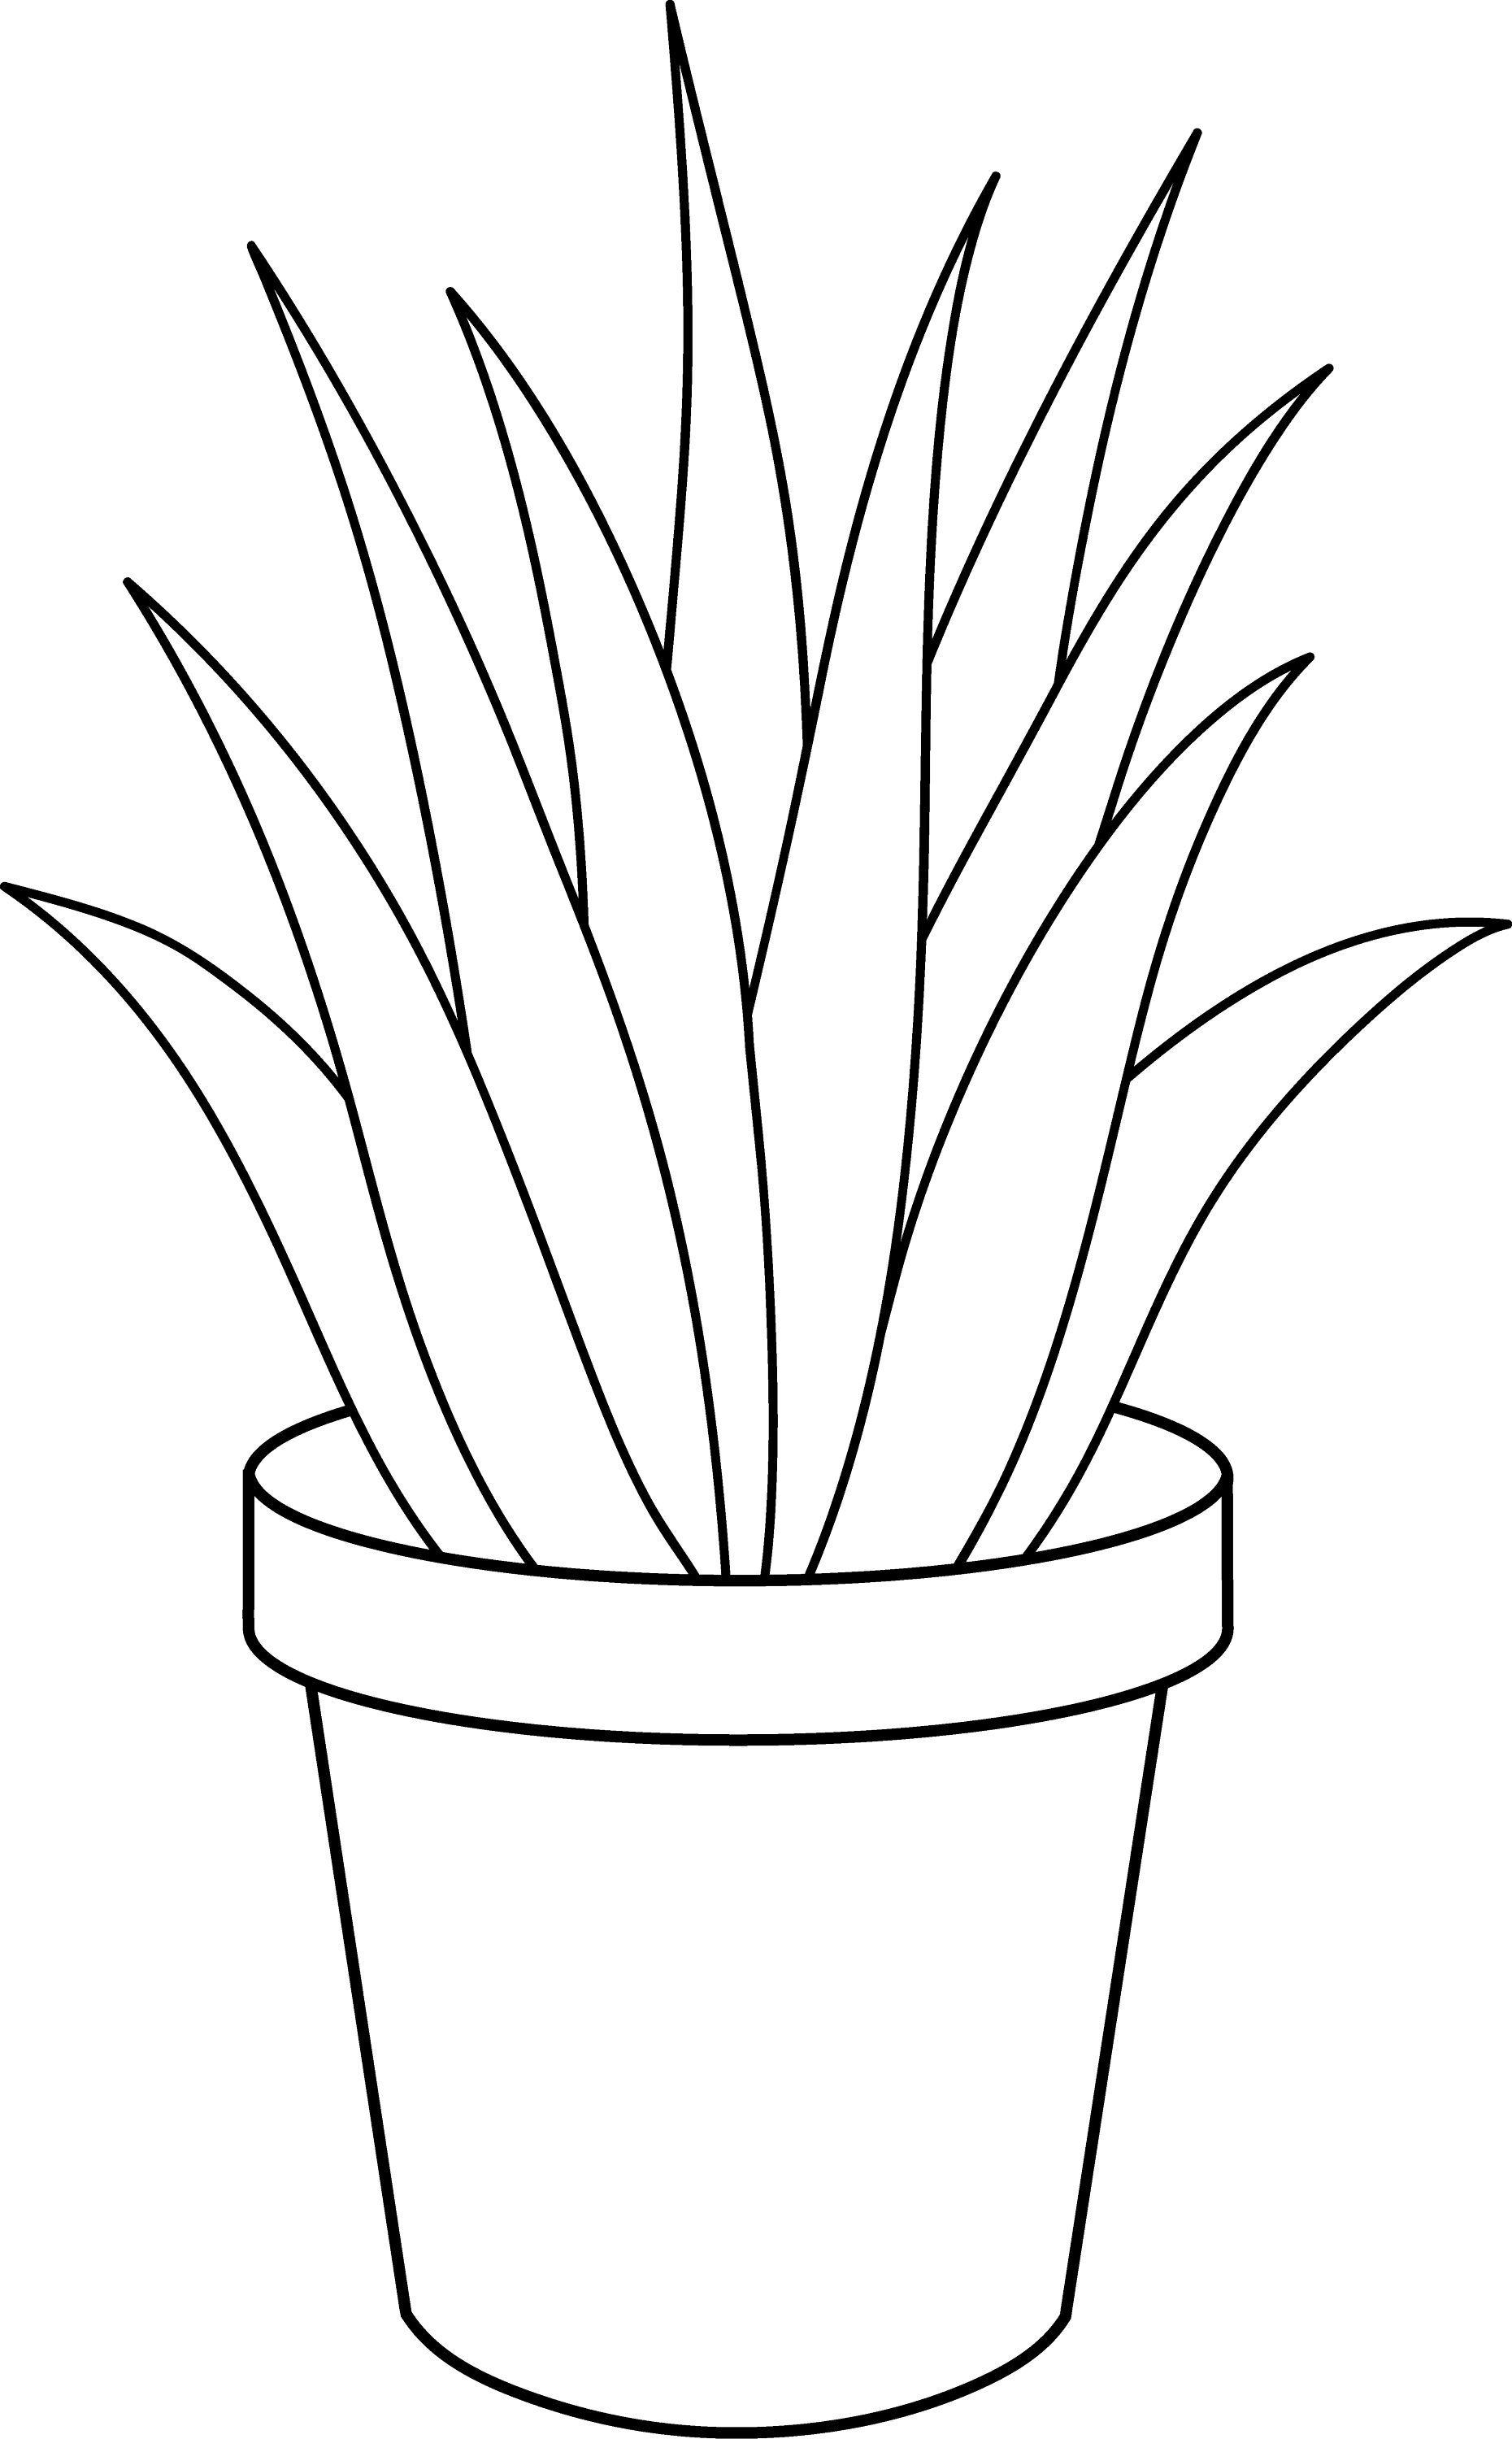 clipart plants black and white - photo #10